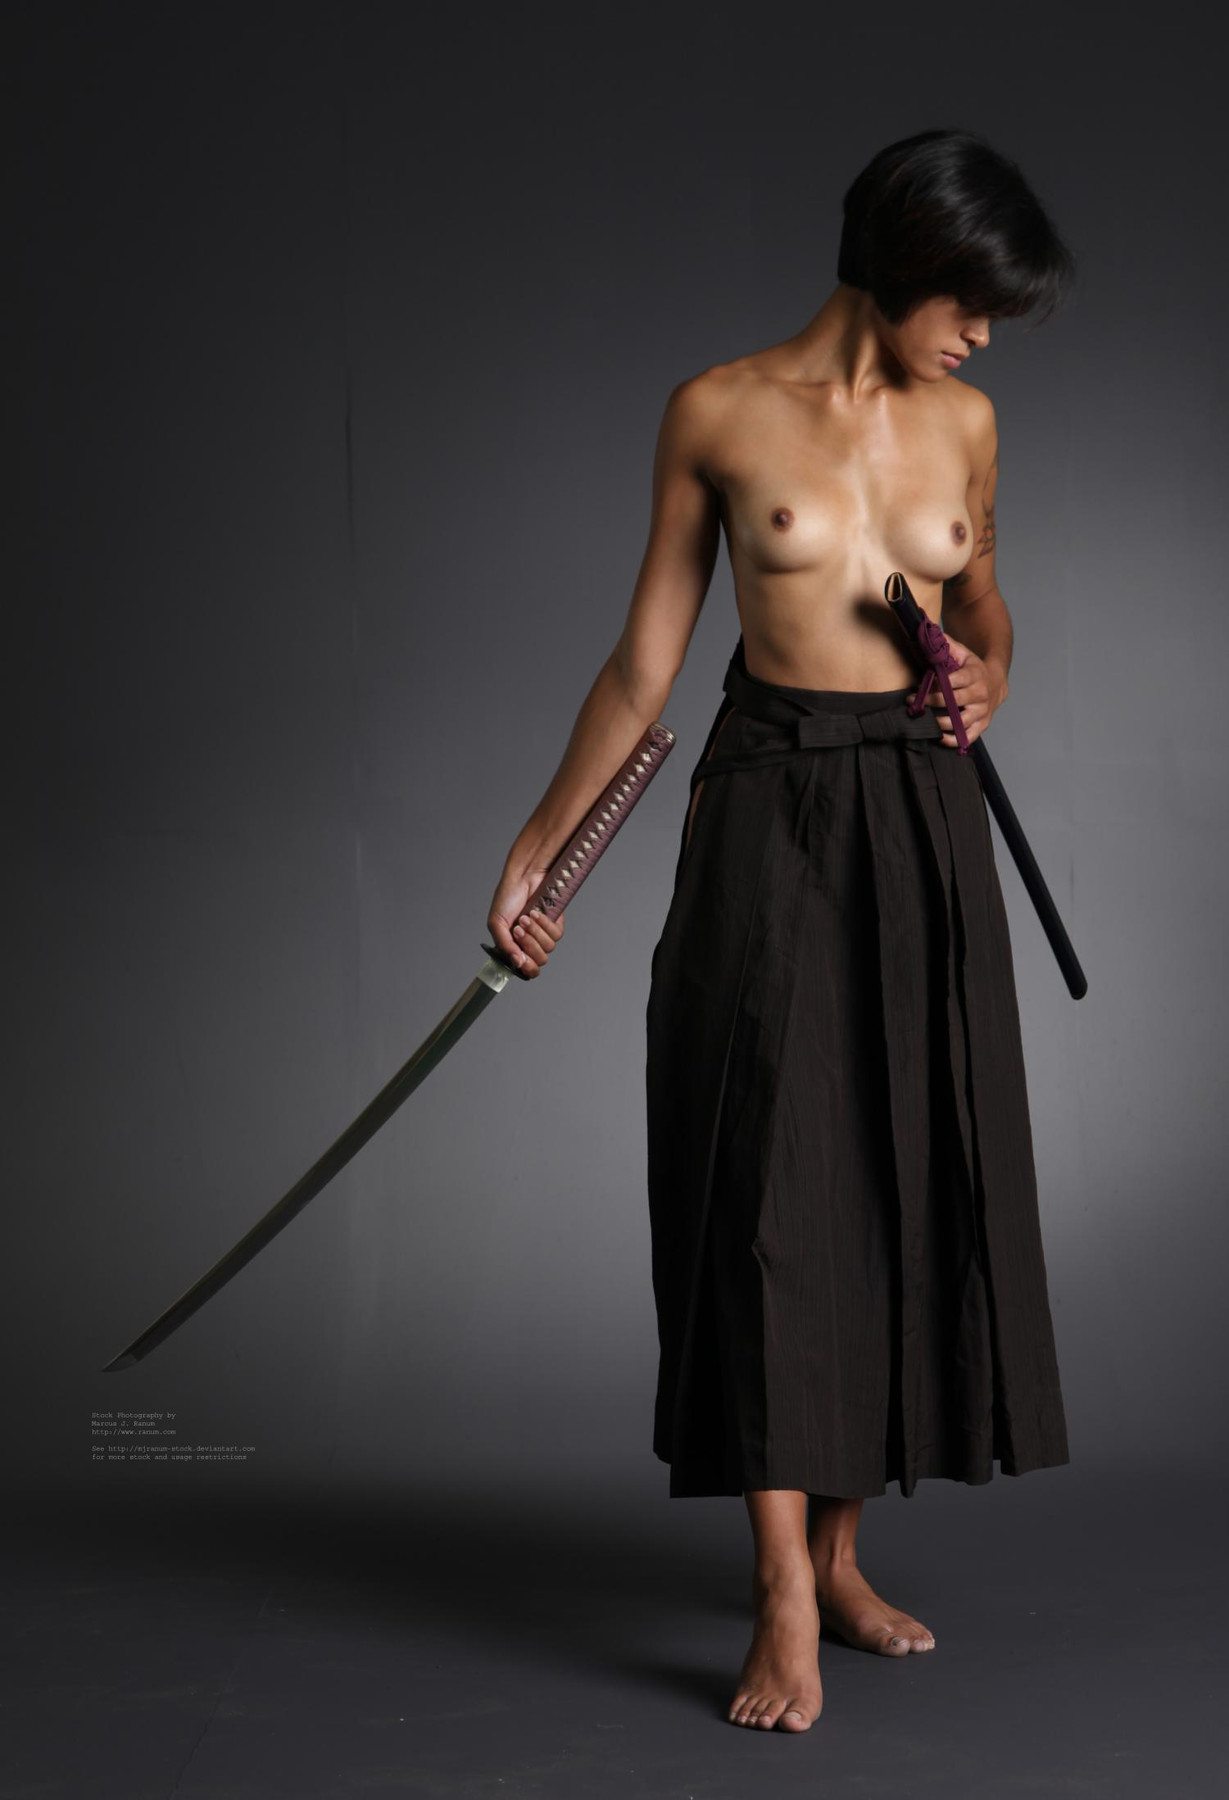 голые японки с мечами фото 2